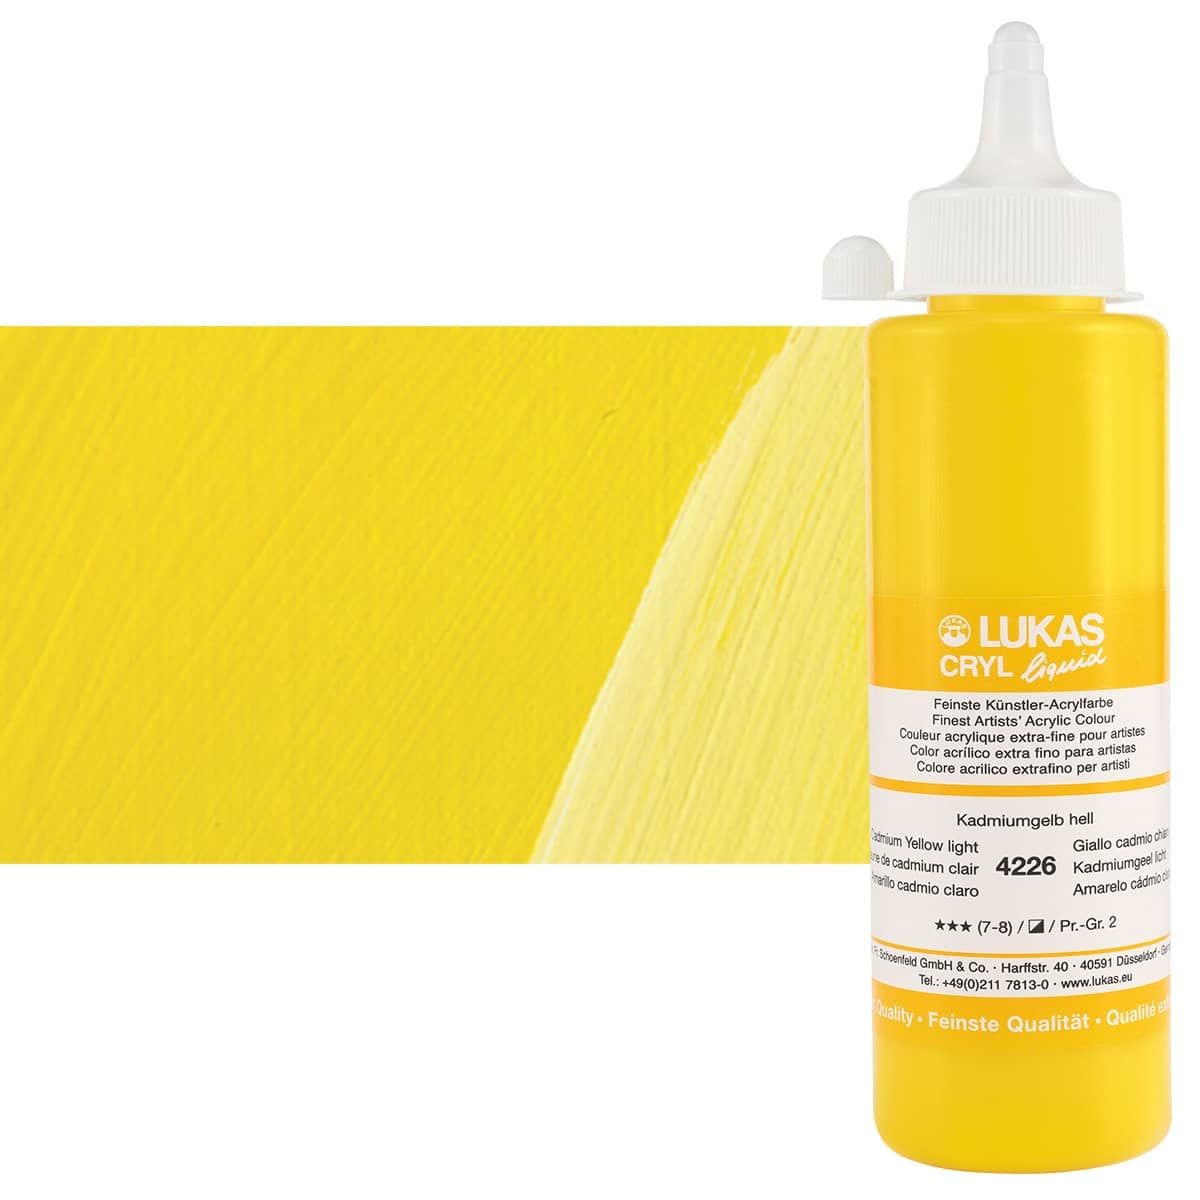 Lukas Cryl Liquid Acrylic - Cadmium Yellow Light, 250ml Bottle